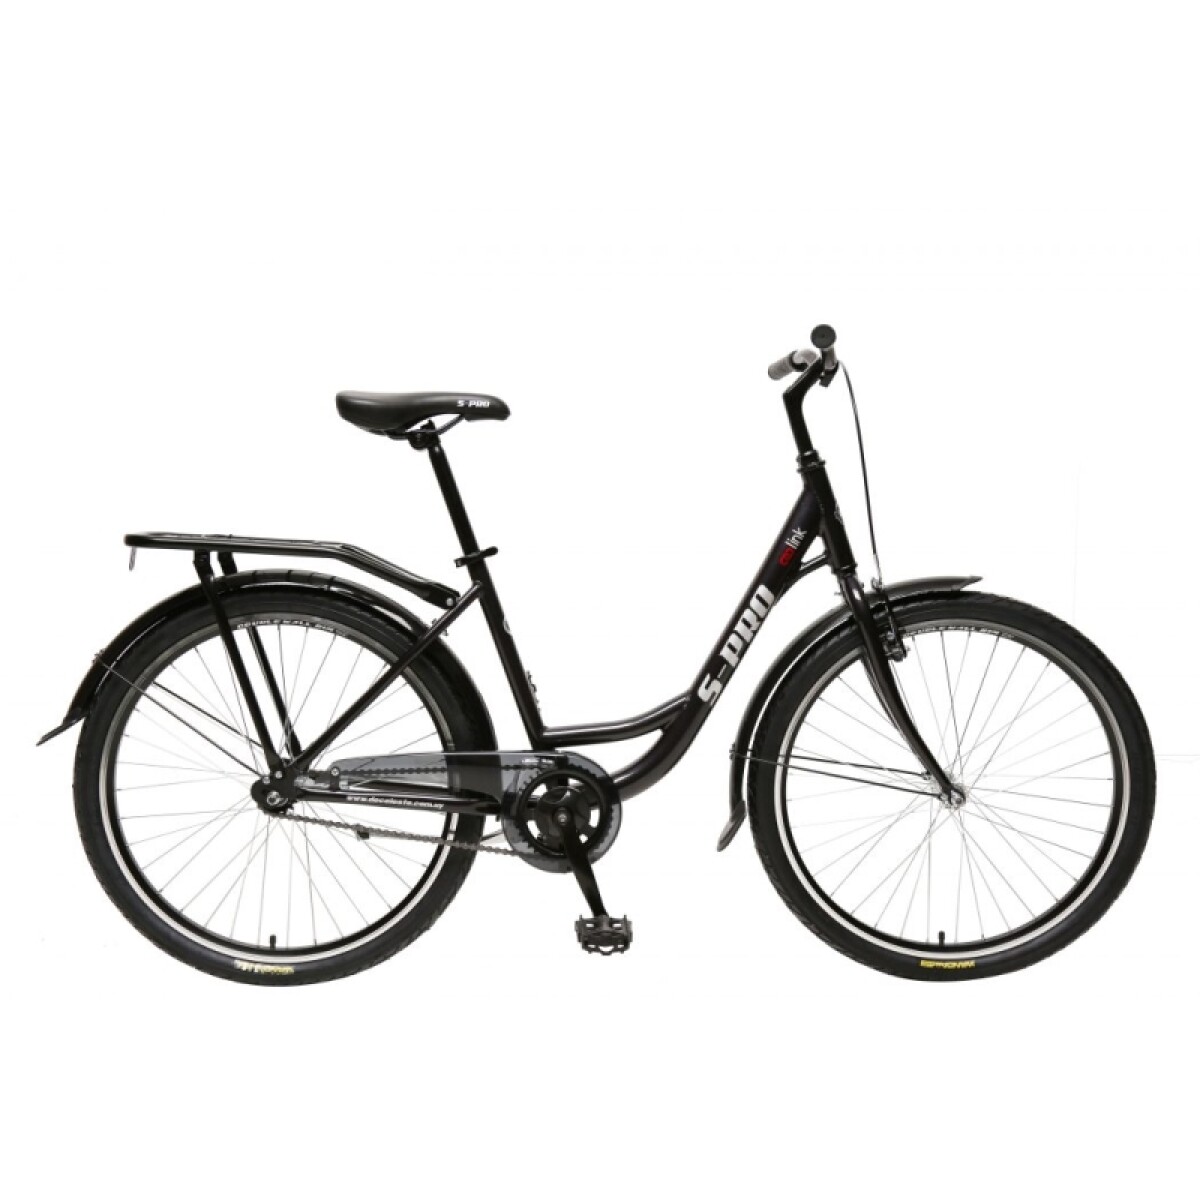 Bicicleta S-pro Urbana Link R.26 Dama Aluminio - Gris 